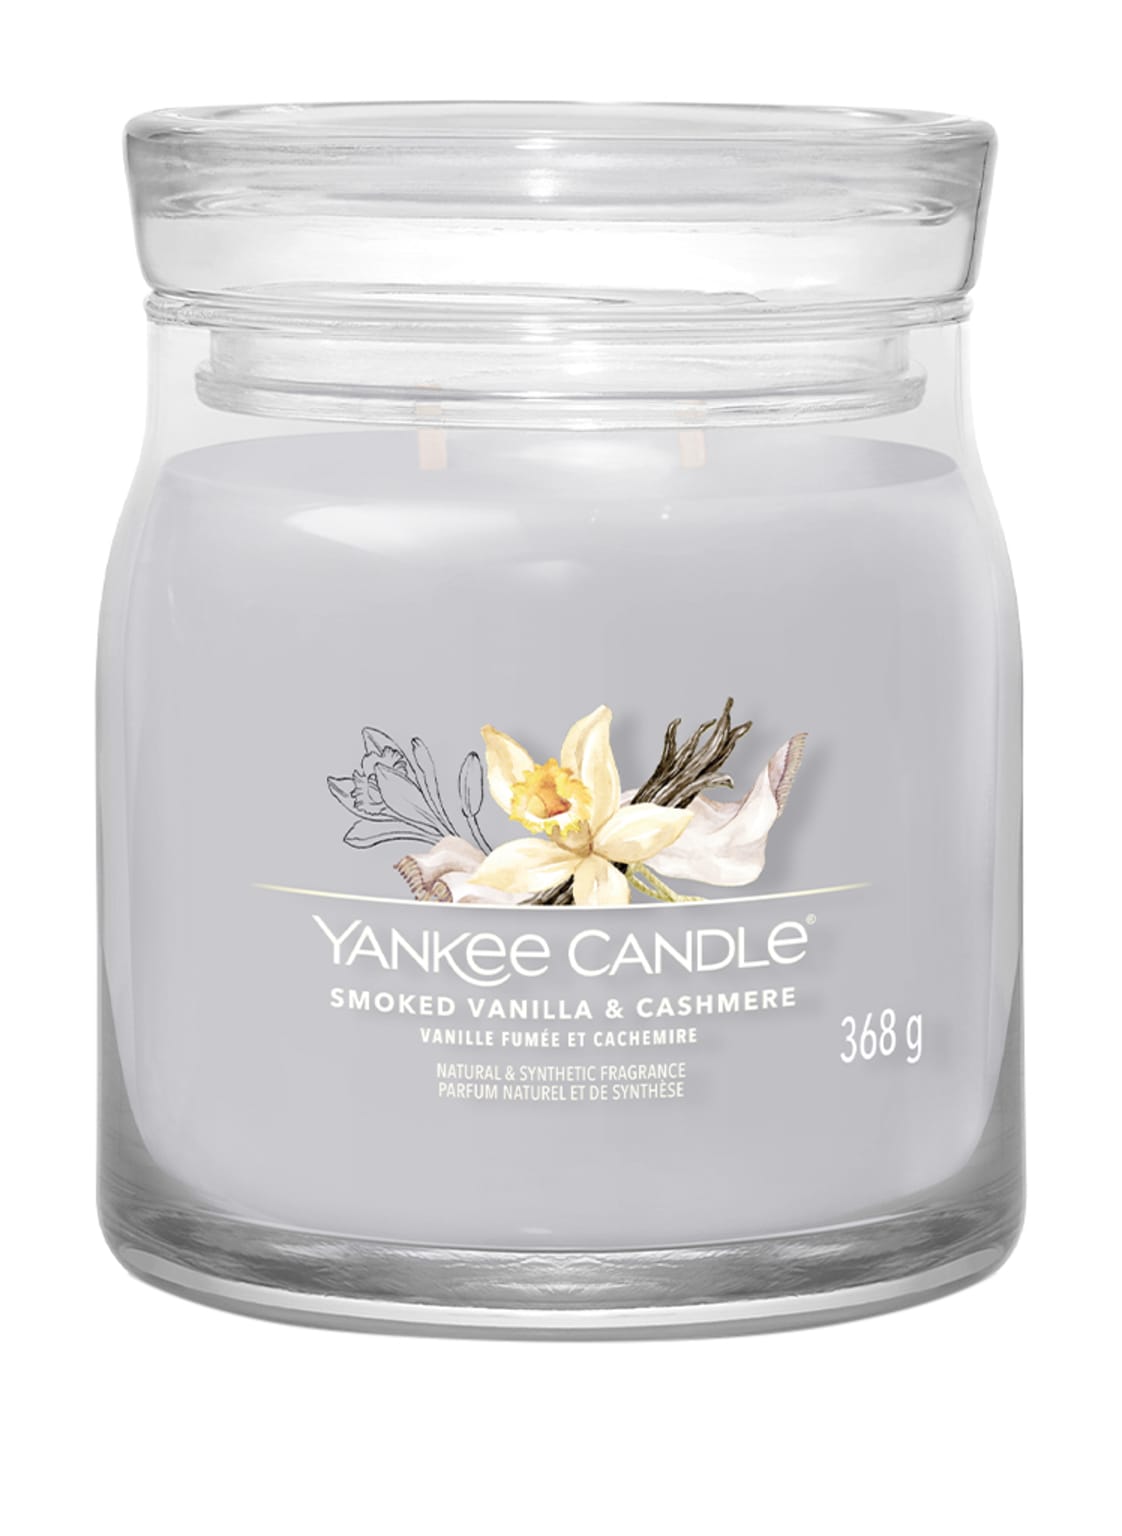 Yankee Candle Smoked Vanilla & Cashmere Duftkerze 368 g von Yankee Candle